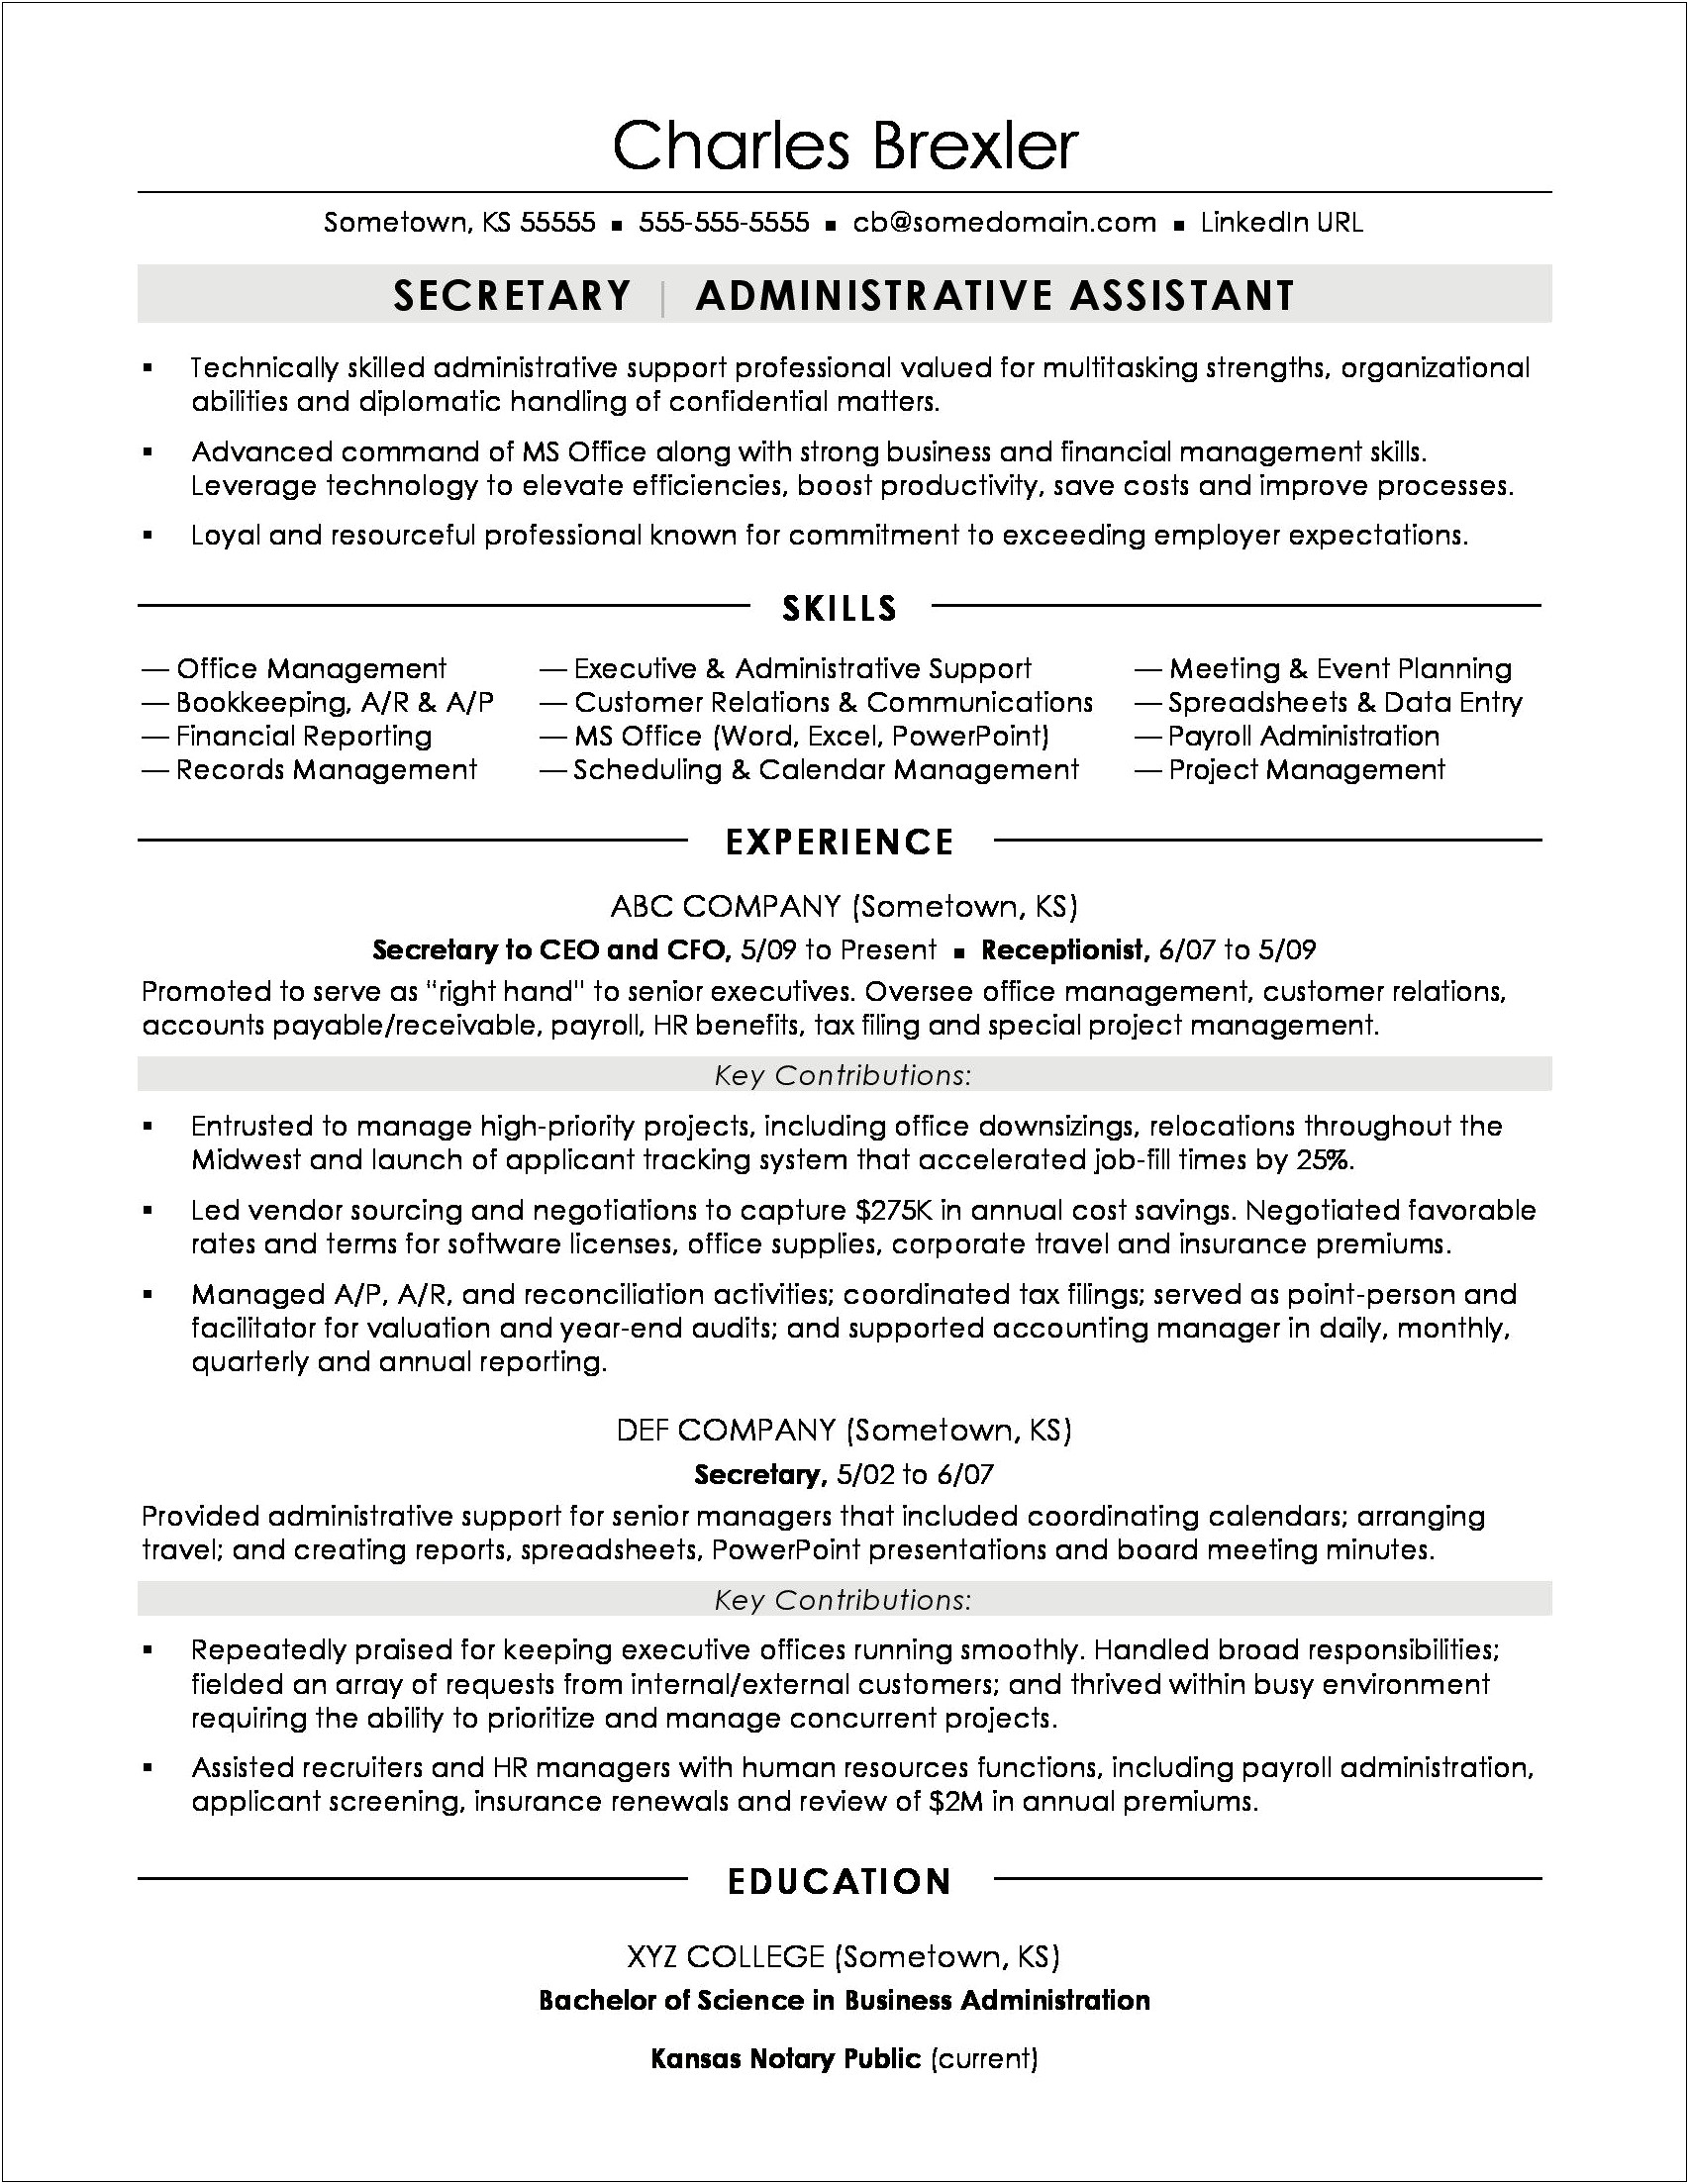 Job Description For Substitute School Secretary For Resume